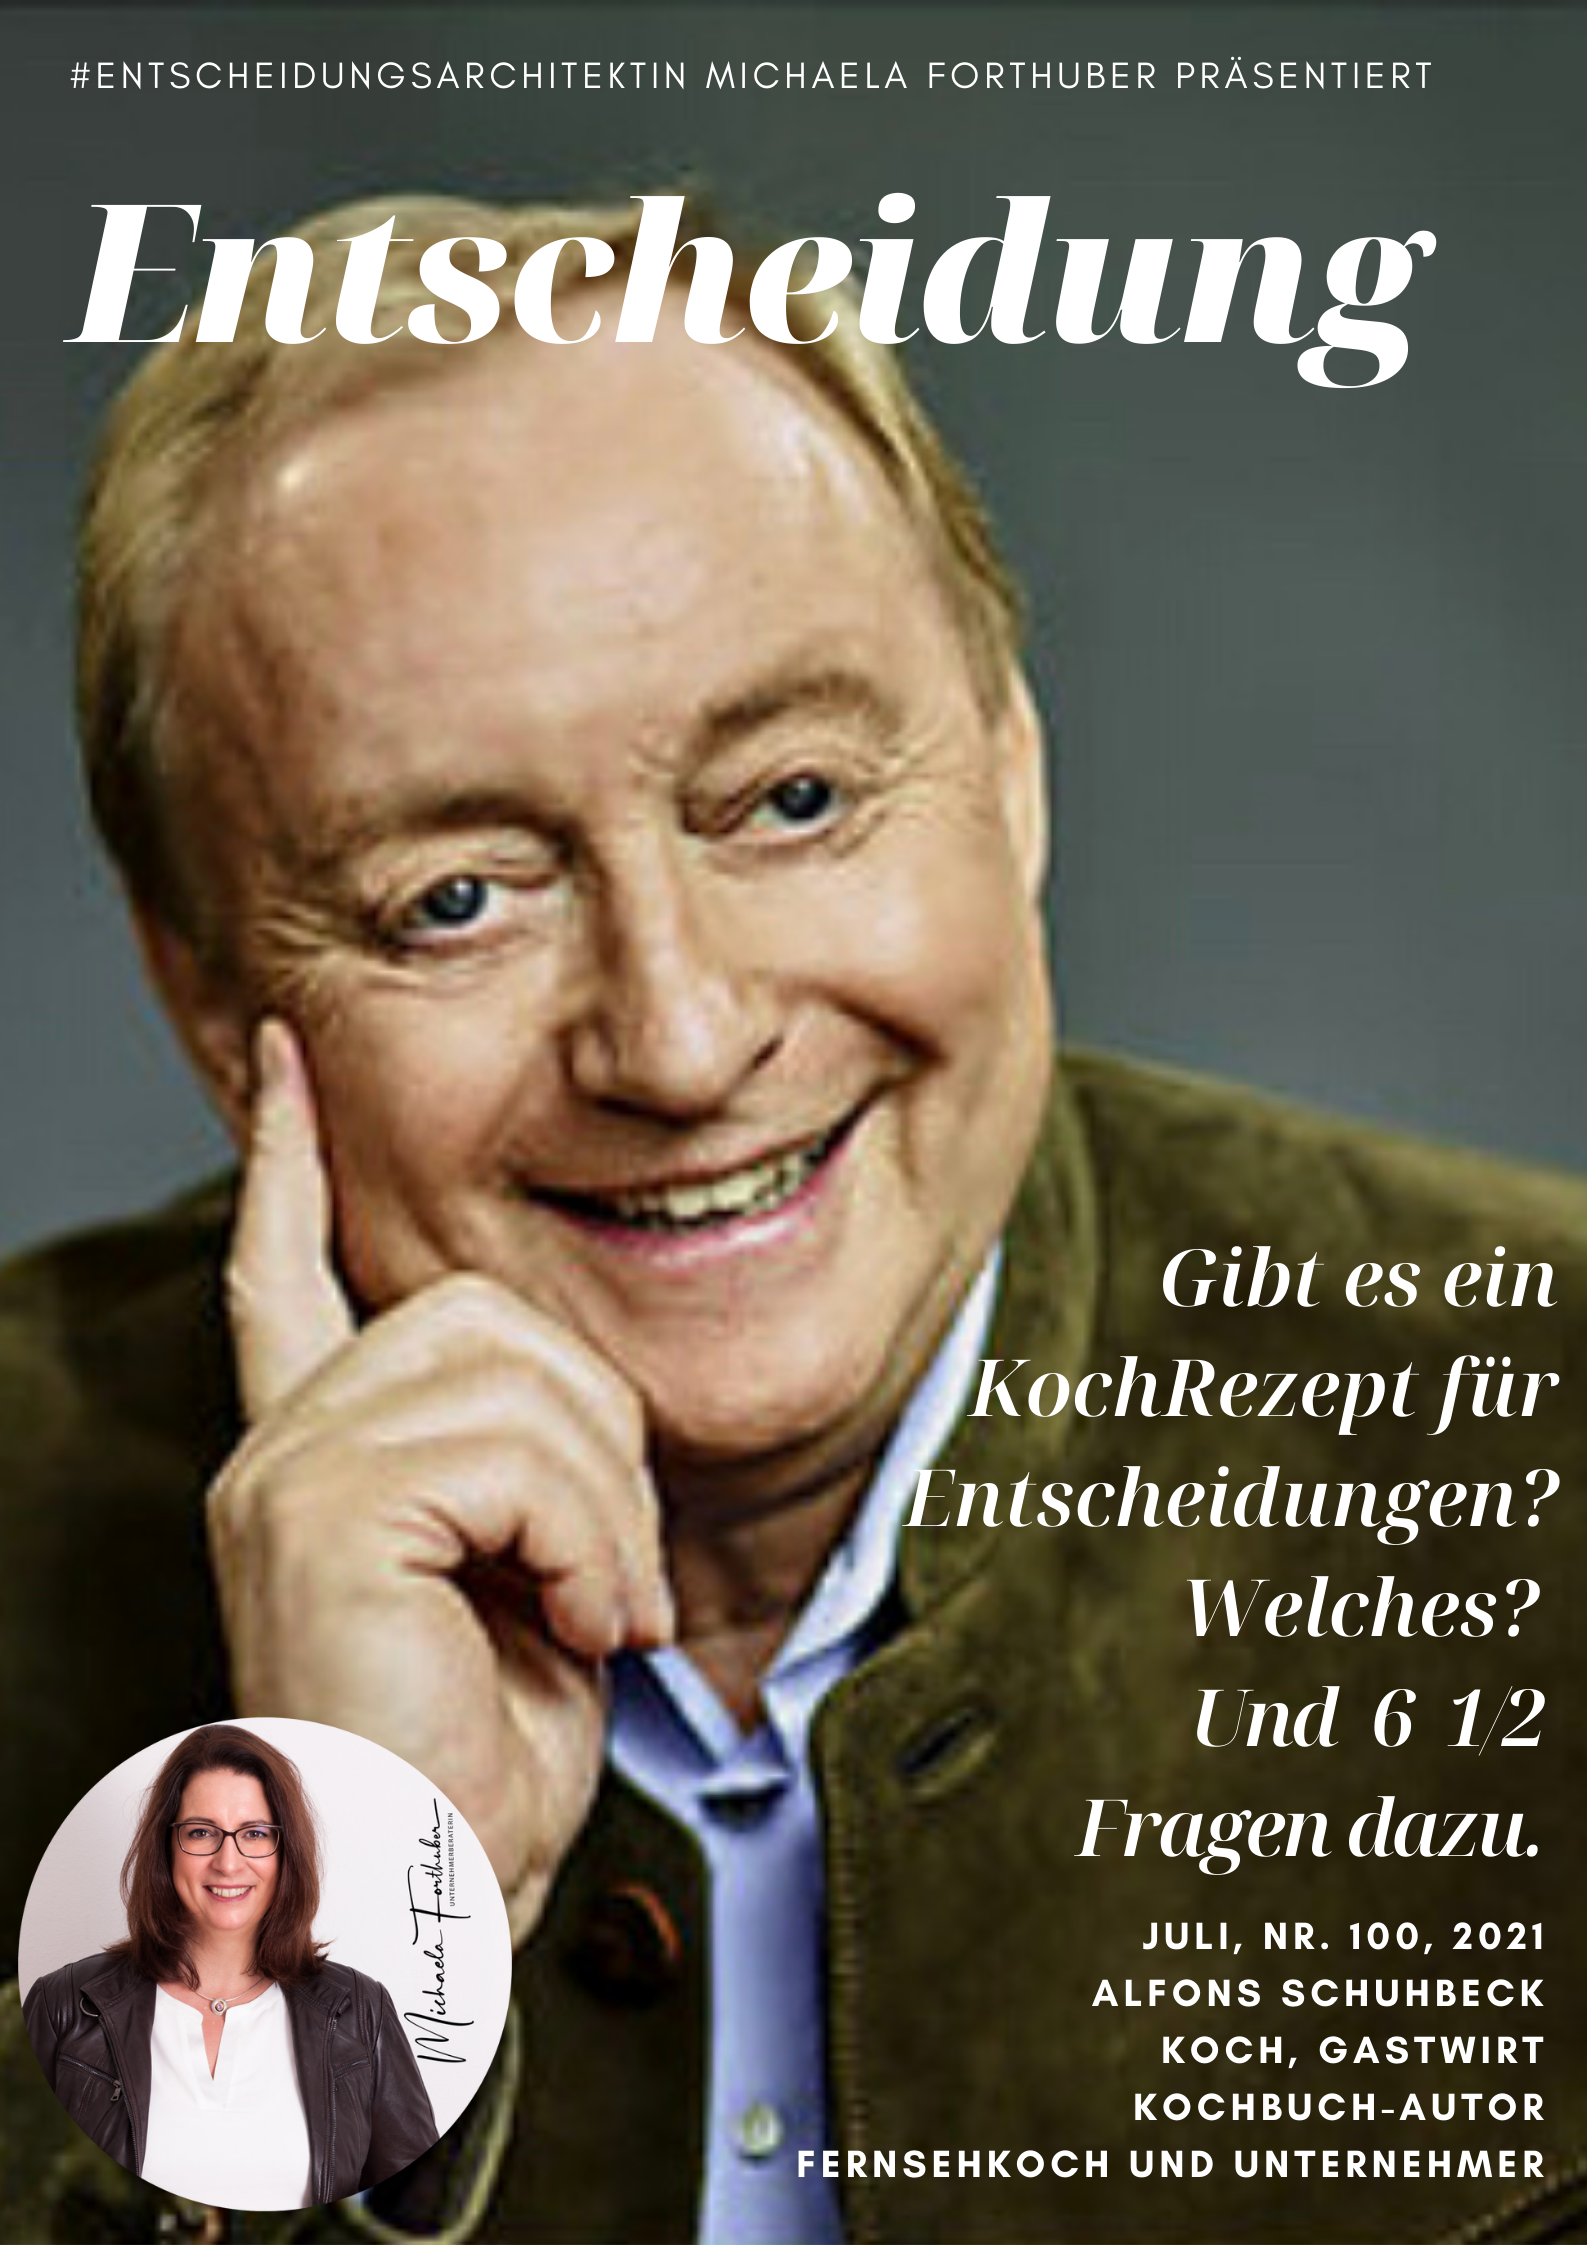 Blog Interview Entscheiden Cover Alfons Schuhbeck 100 Interview Michaela Forthuber #Entscheidungsarchitektin